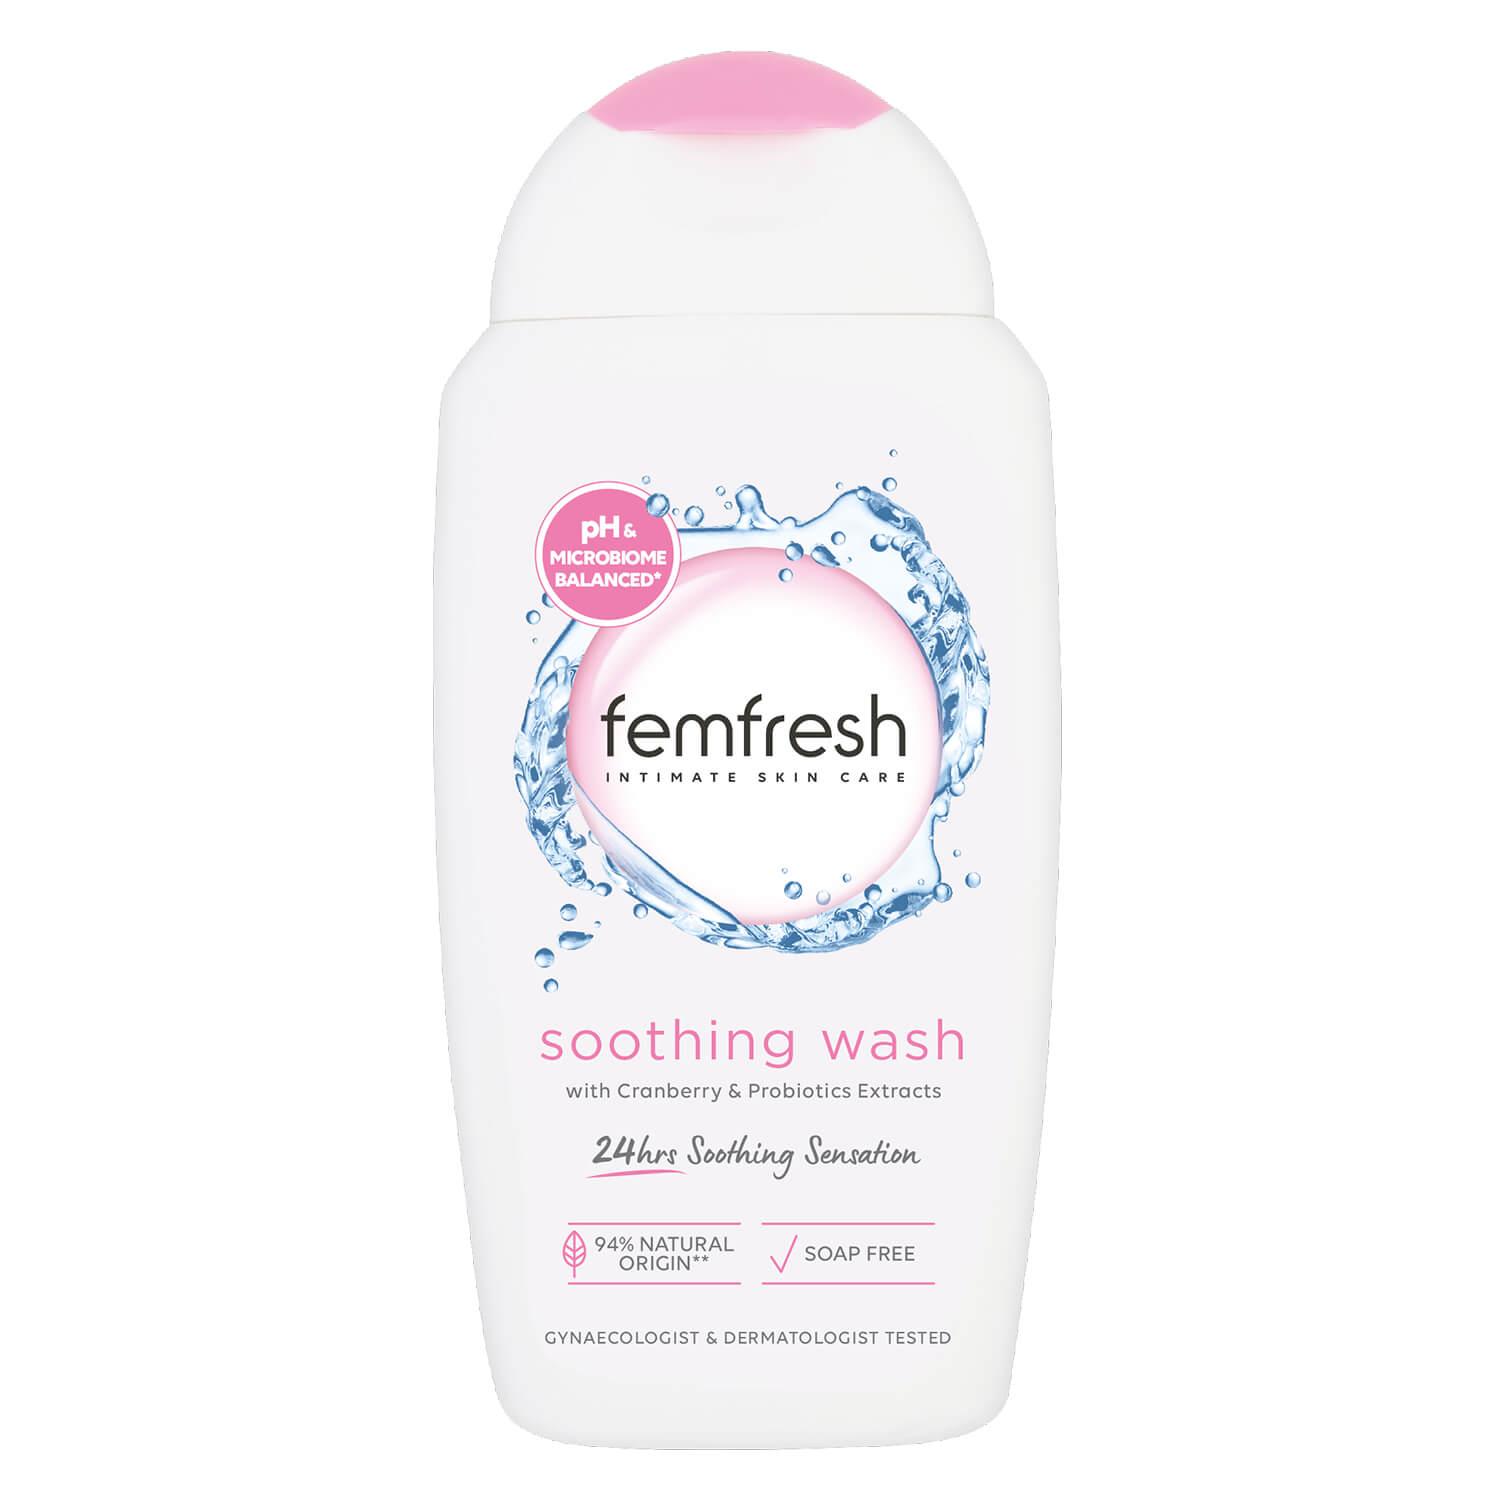 femfresh - soothing wash